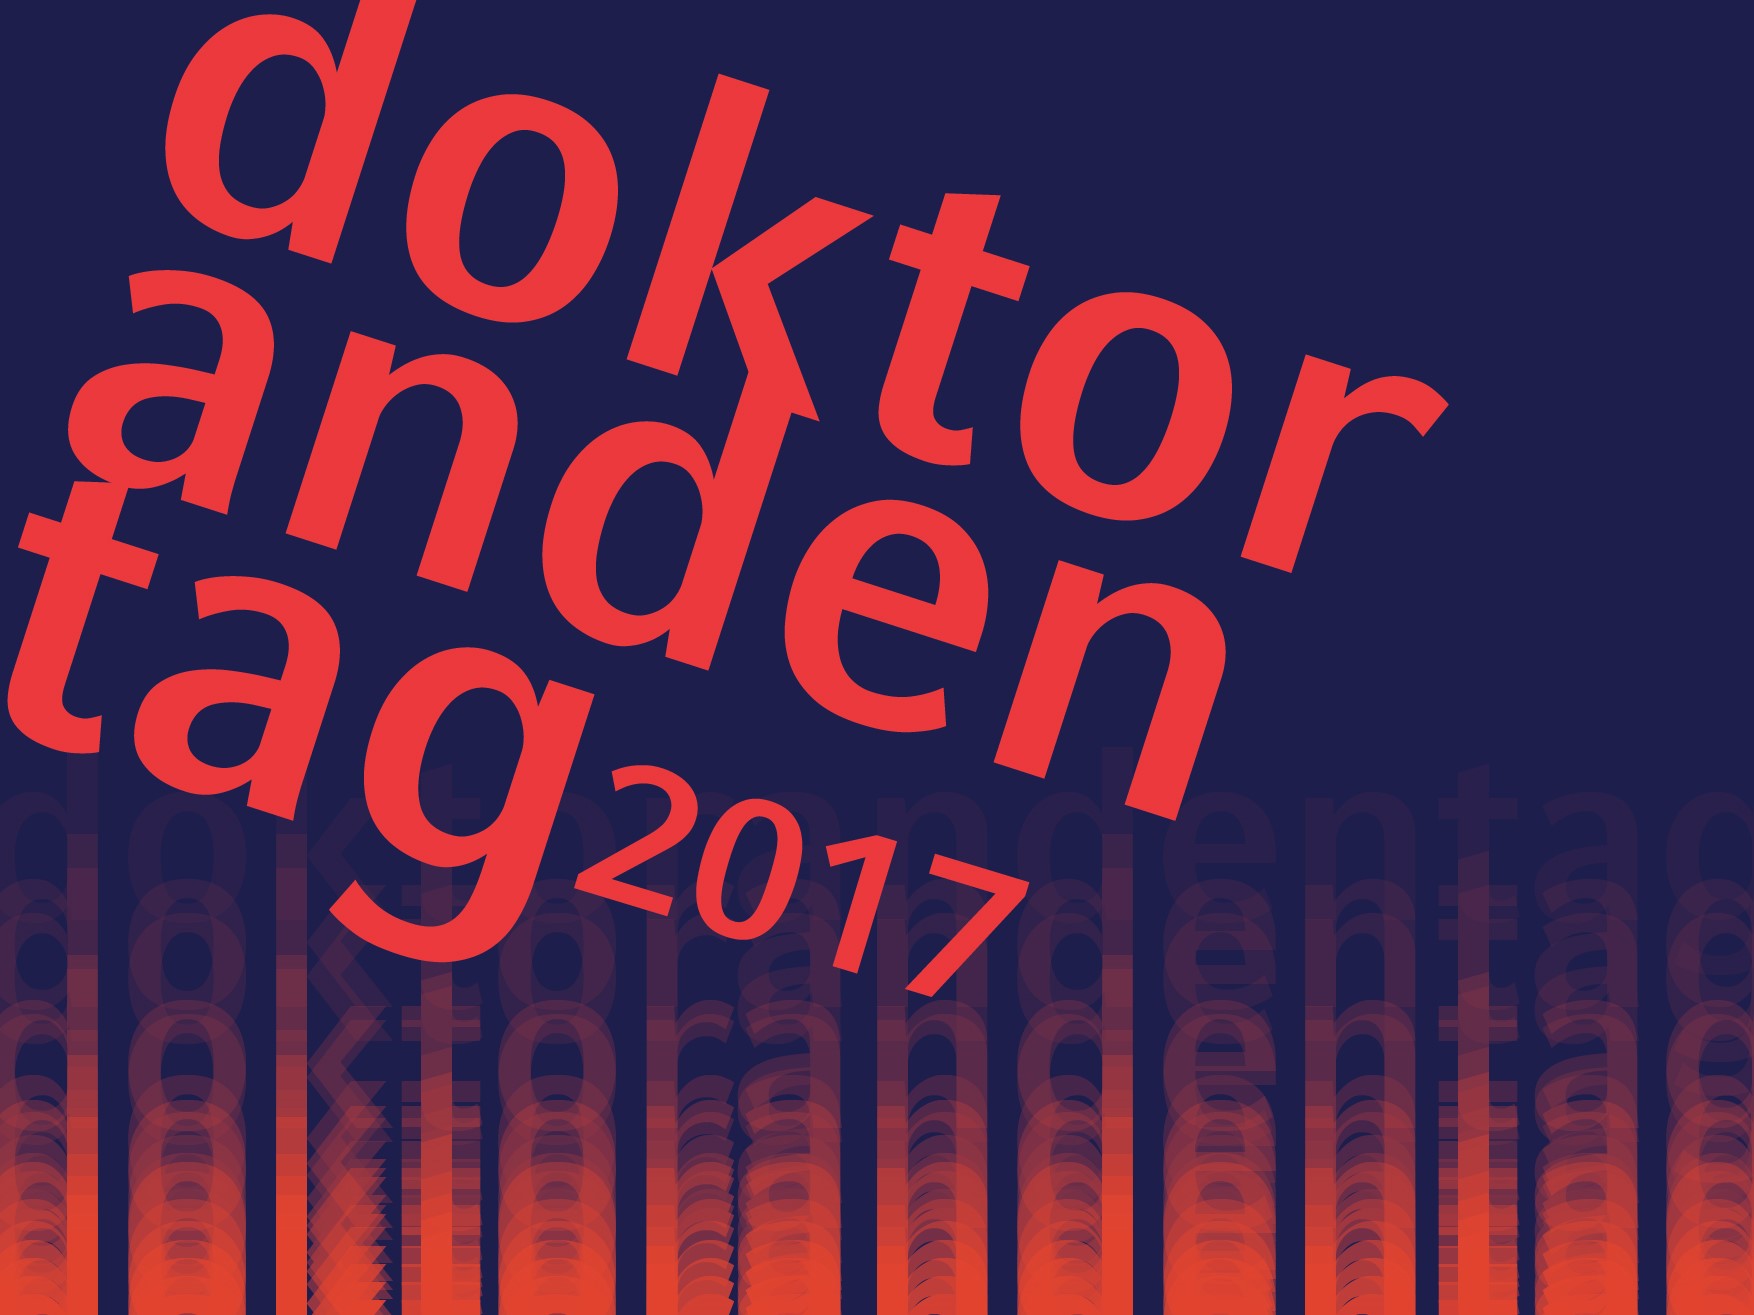 Doktorandentag_2017_logo_web